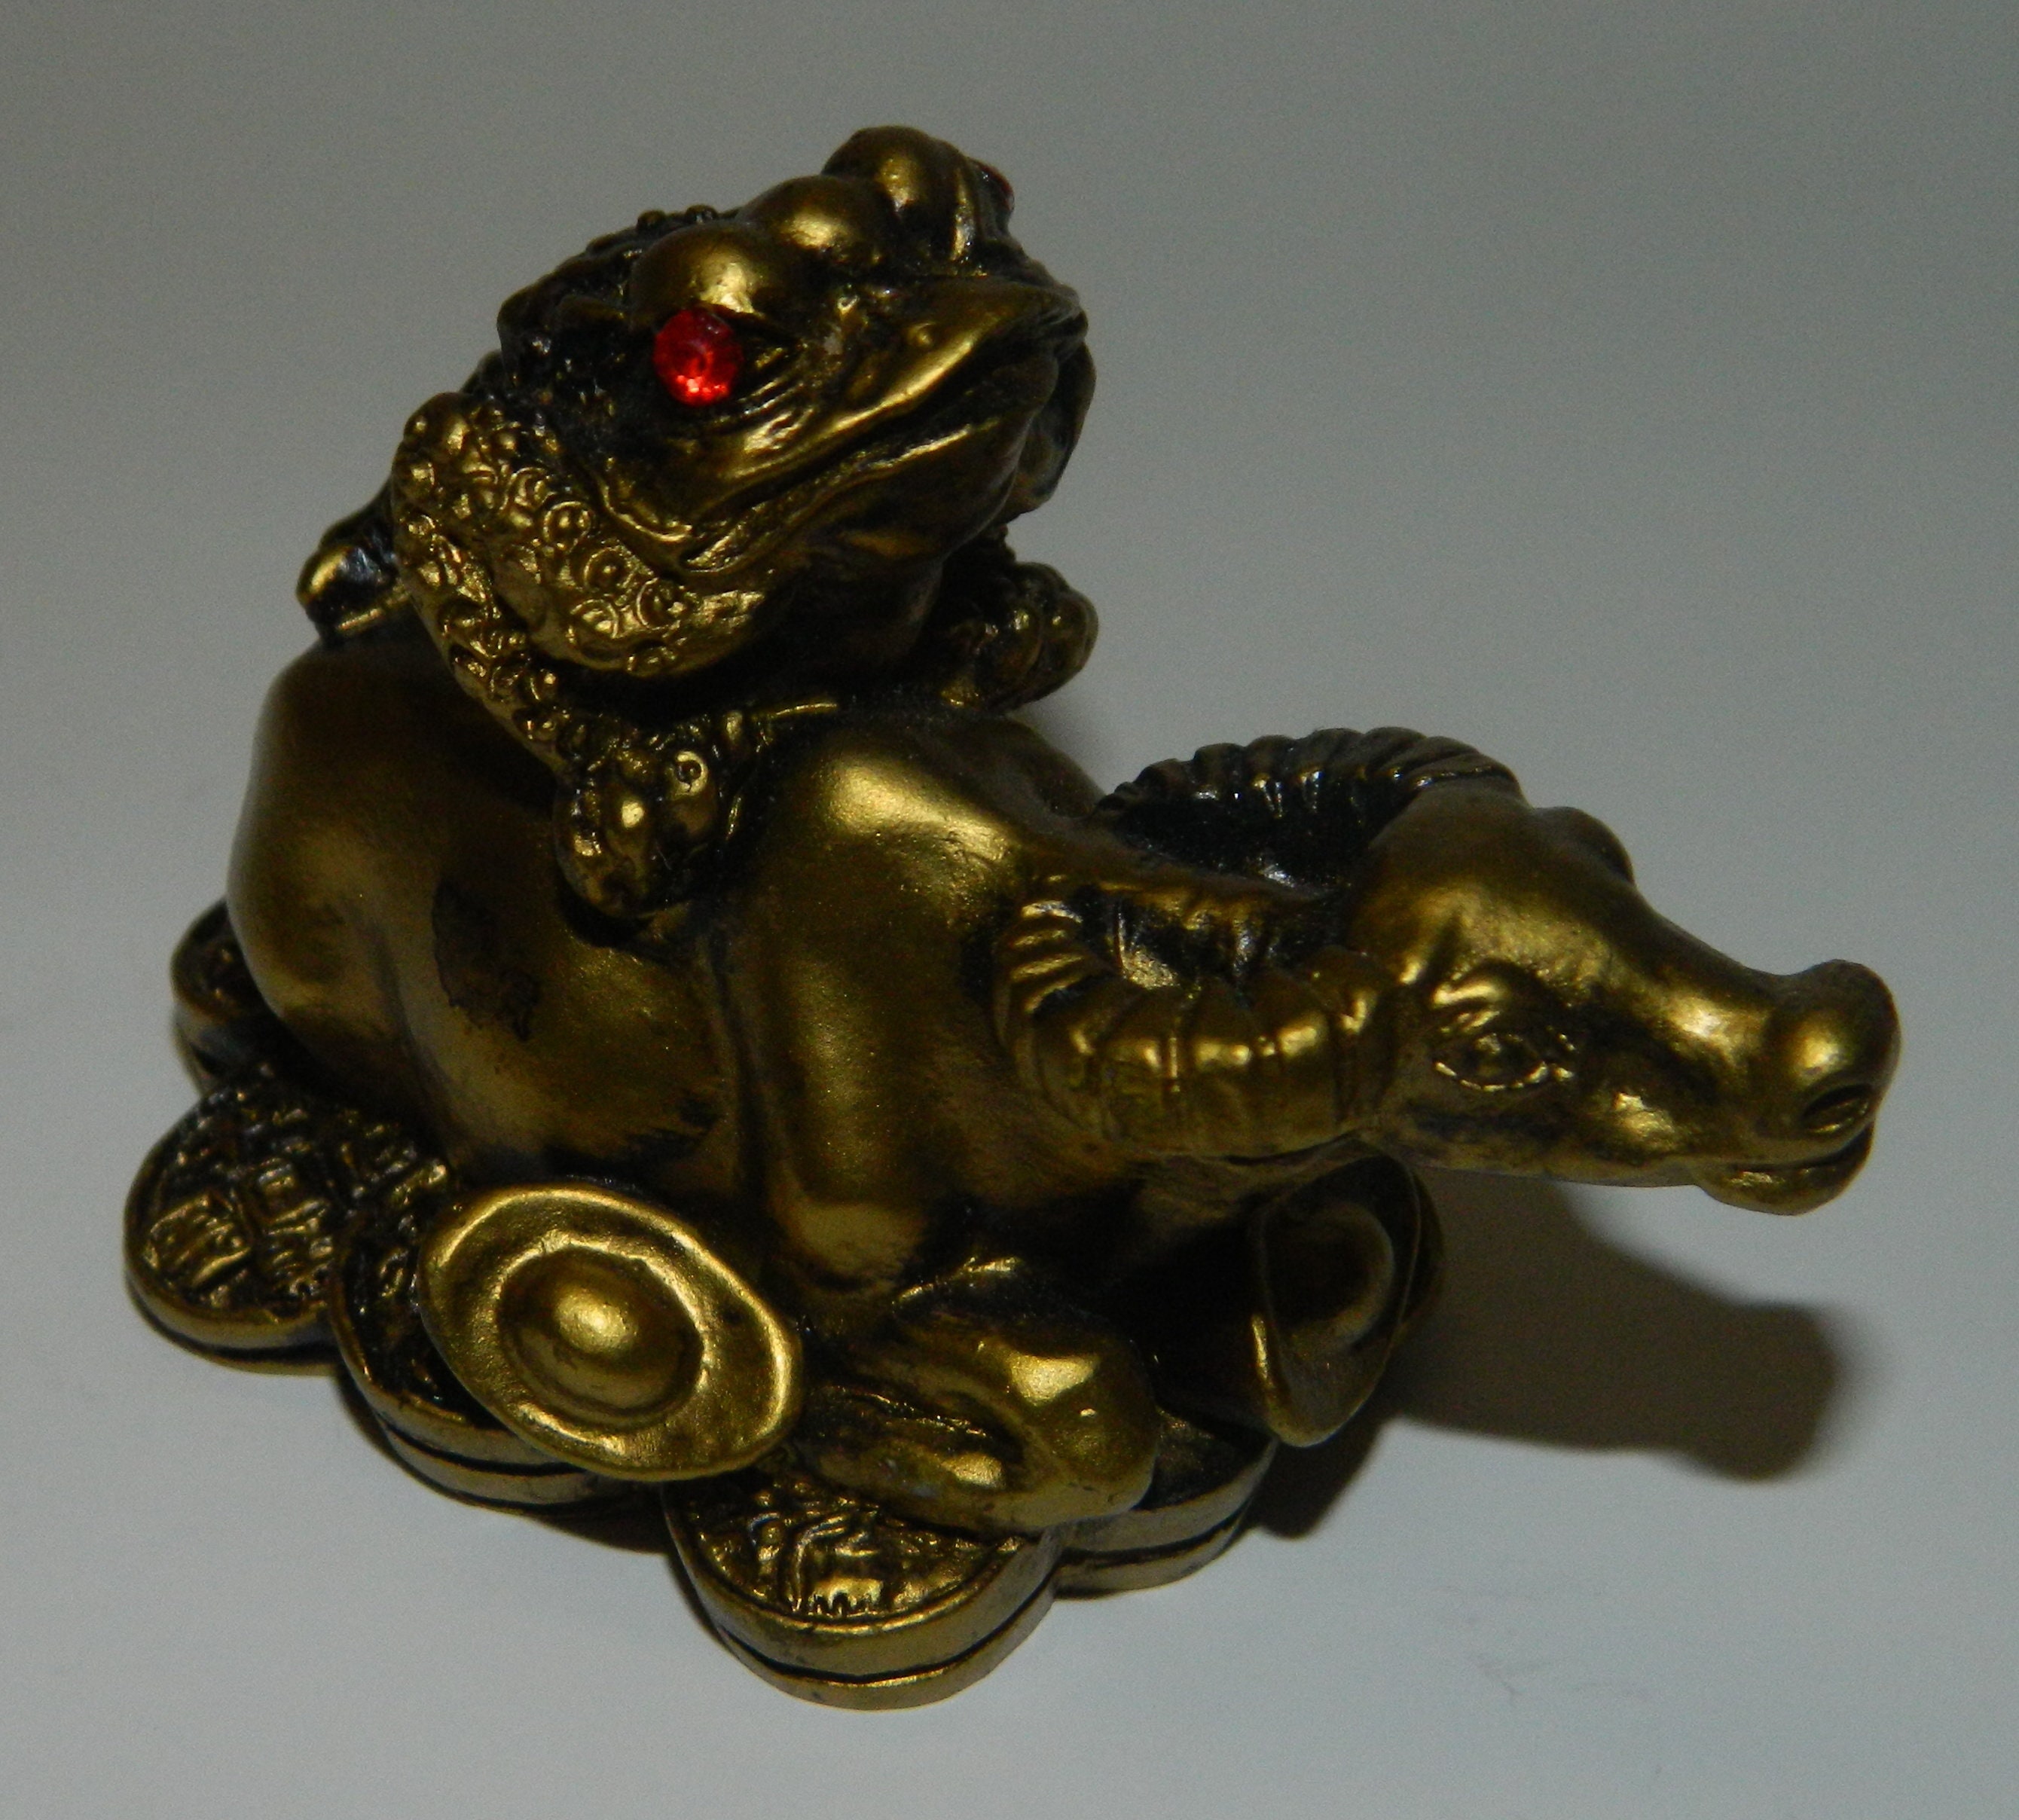 Money Toad On Ram Figurine - 2.5 Tall 3 Wide"